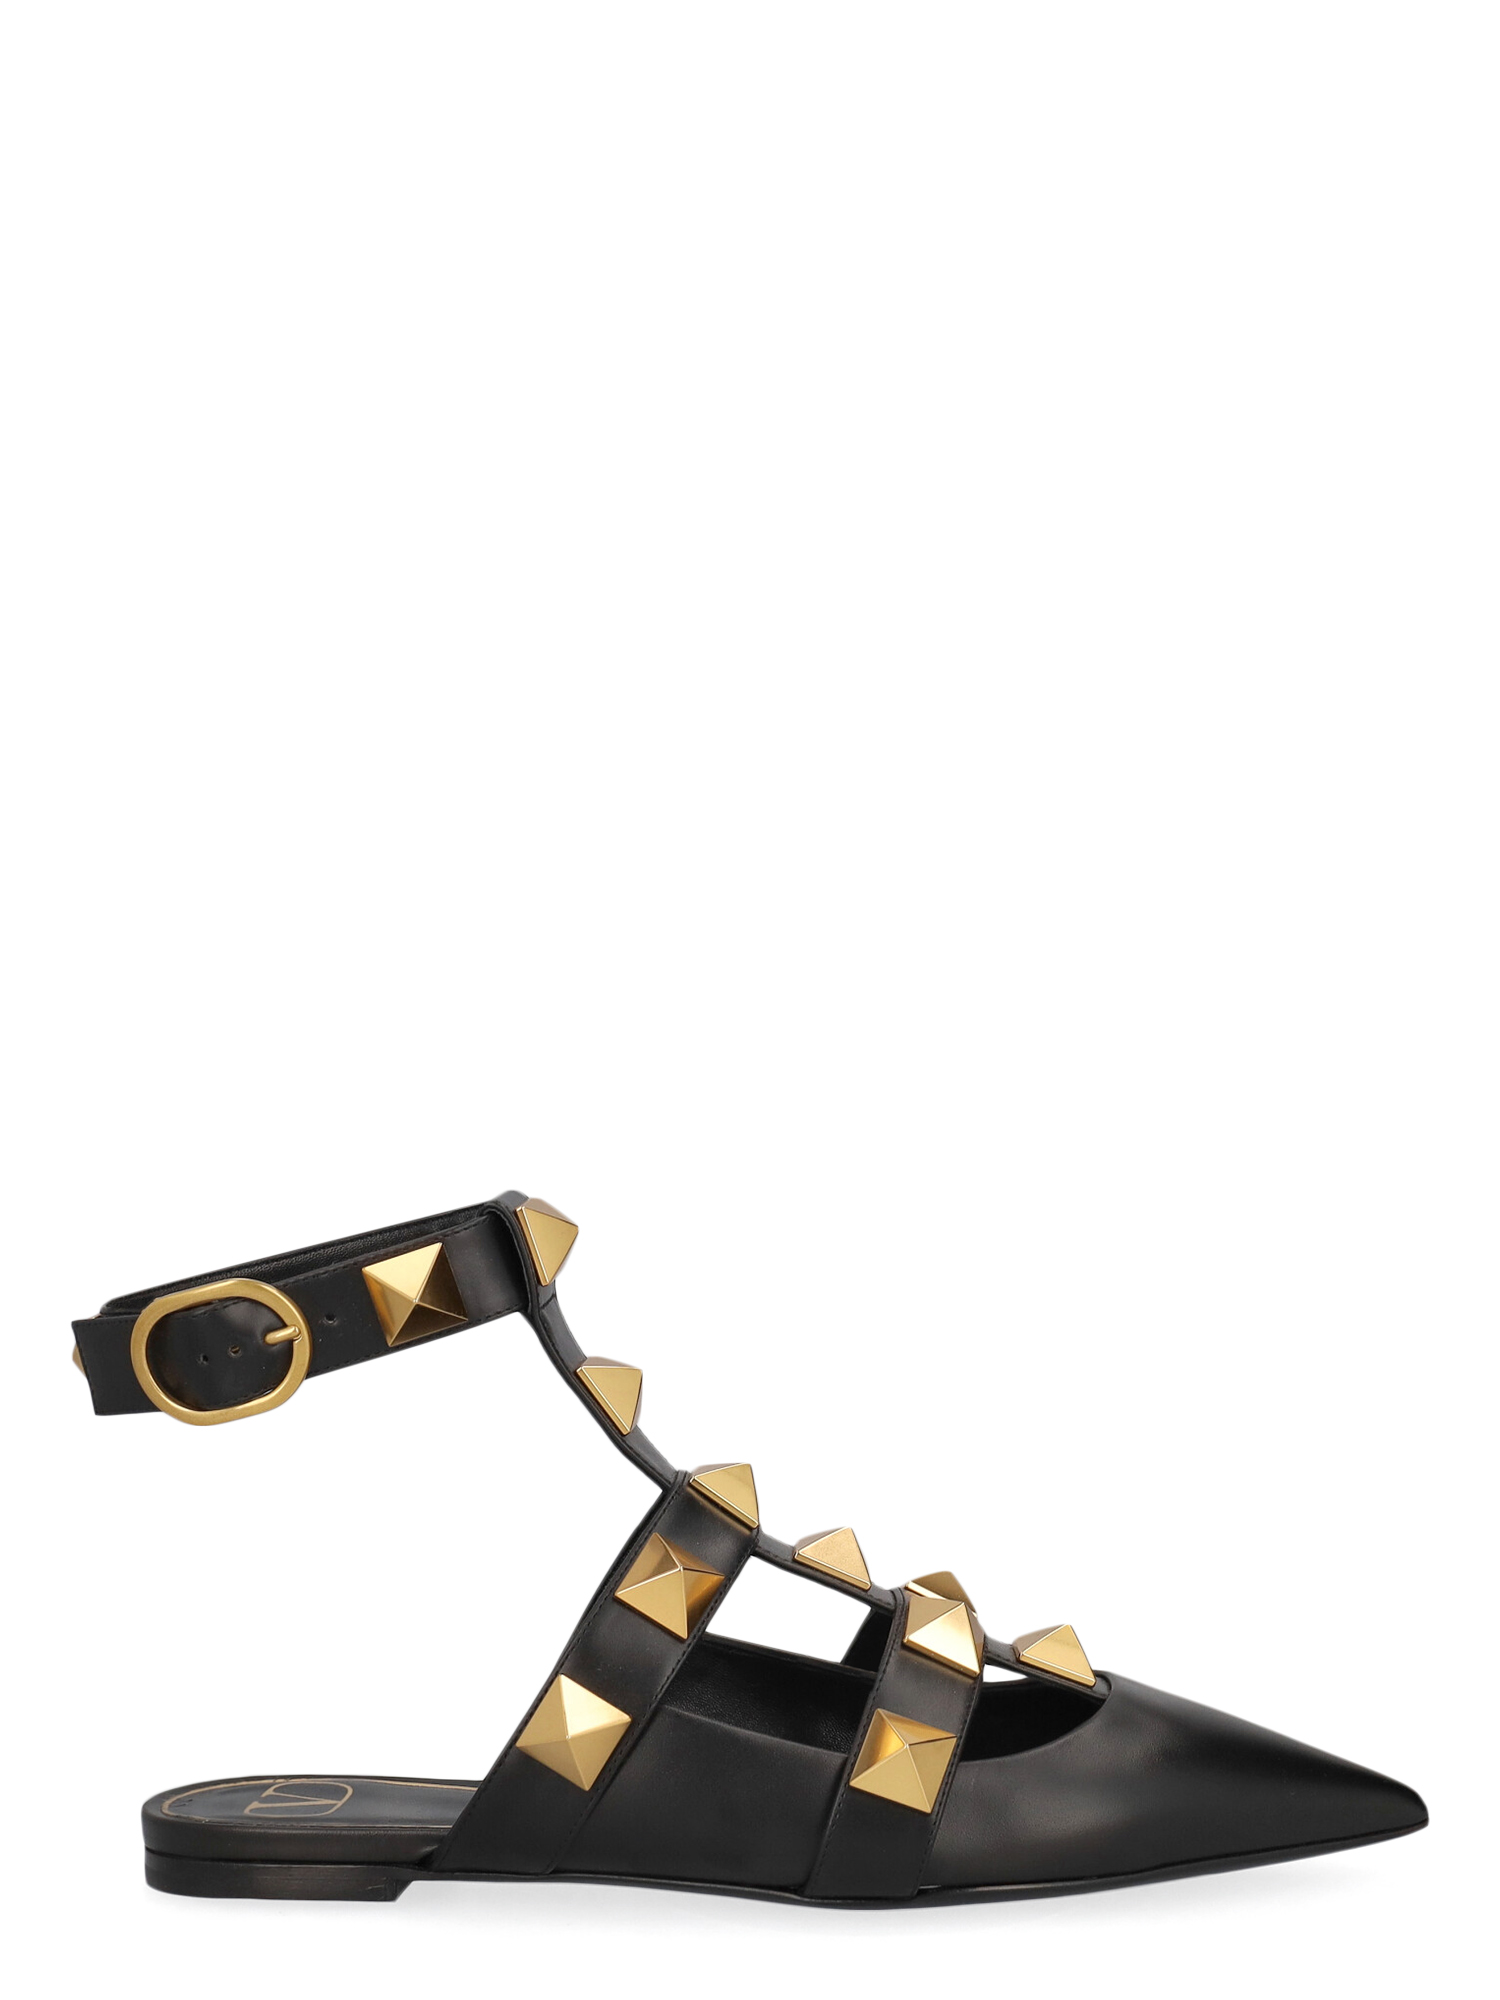 Pre-owned Valentino Garavani Women's Slippers - Valentino - In Black, Gold Leather